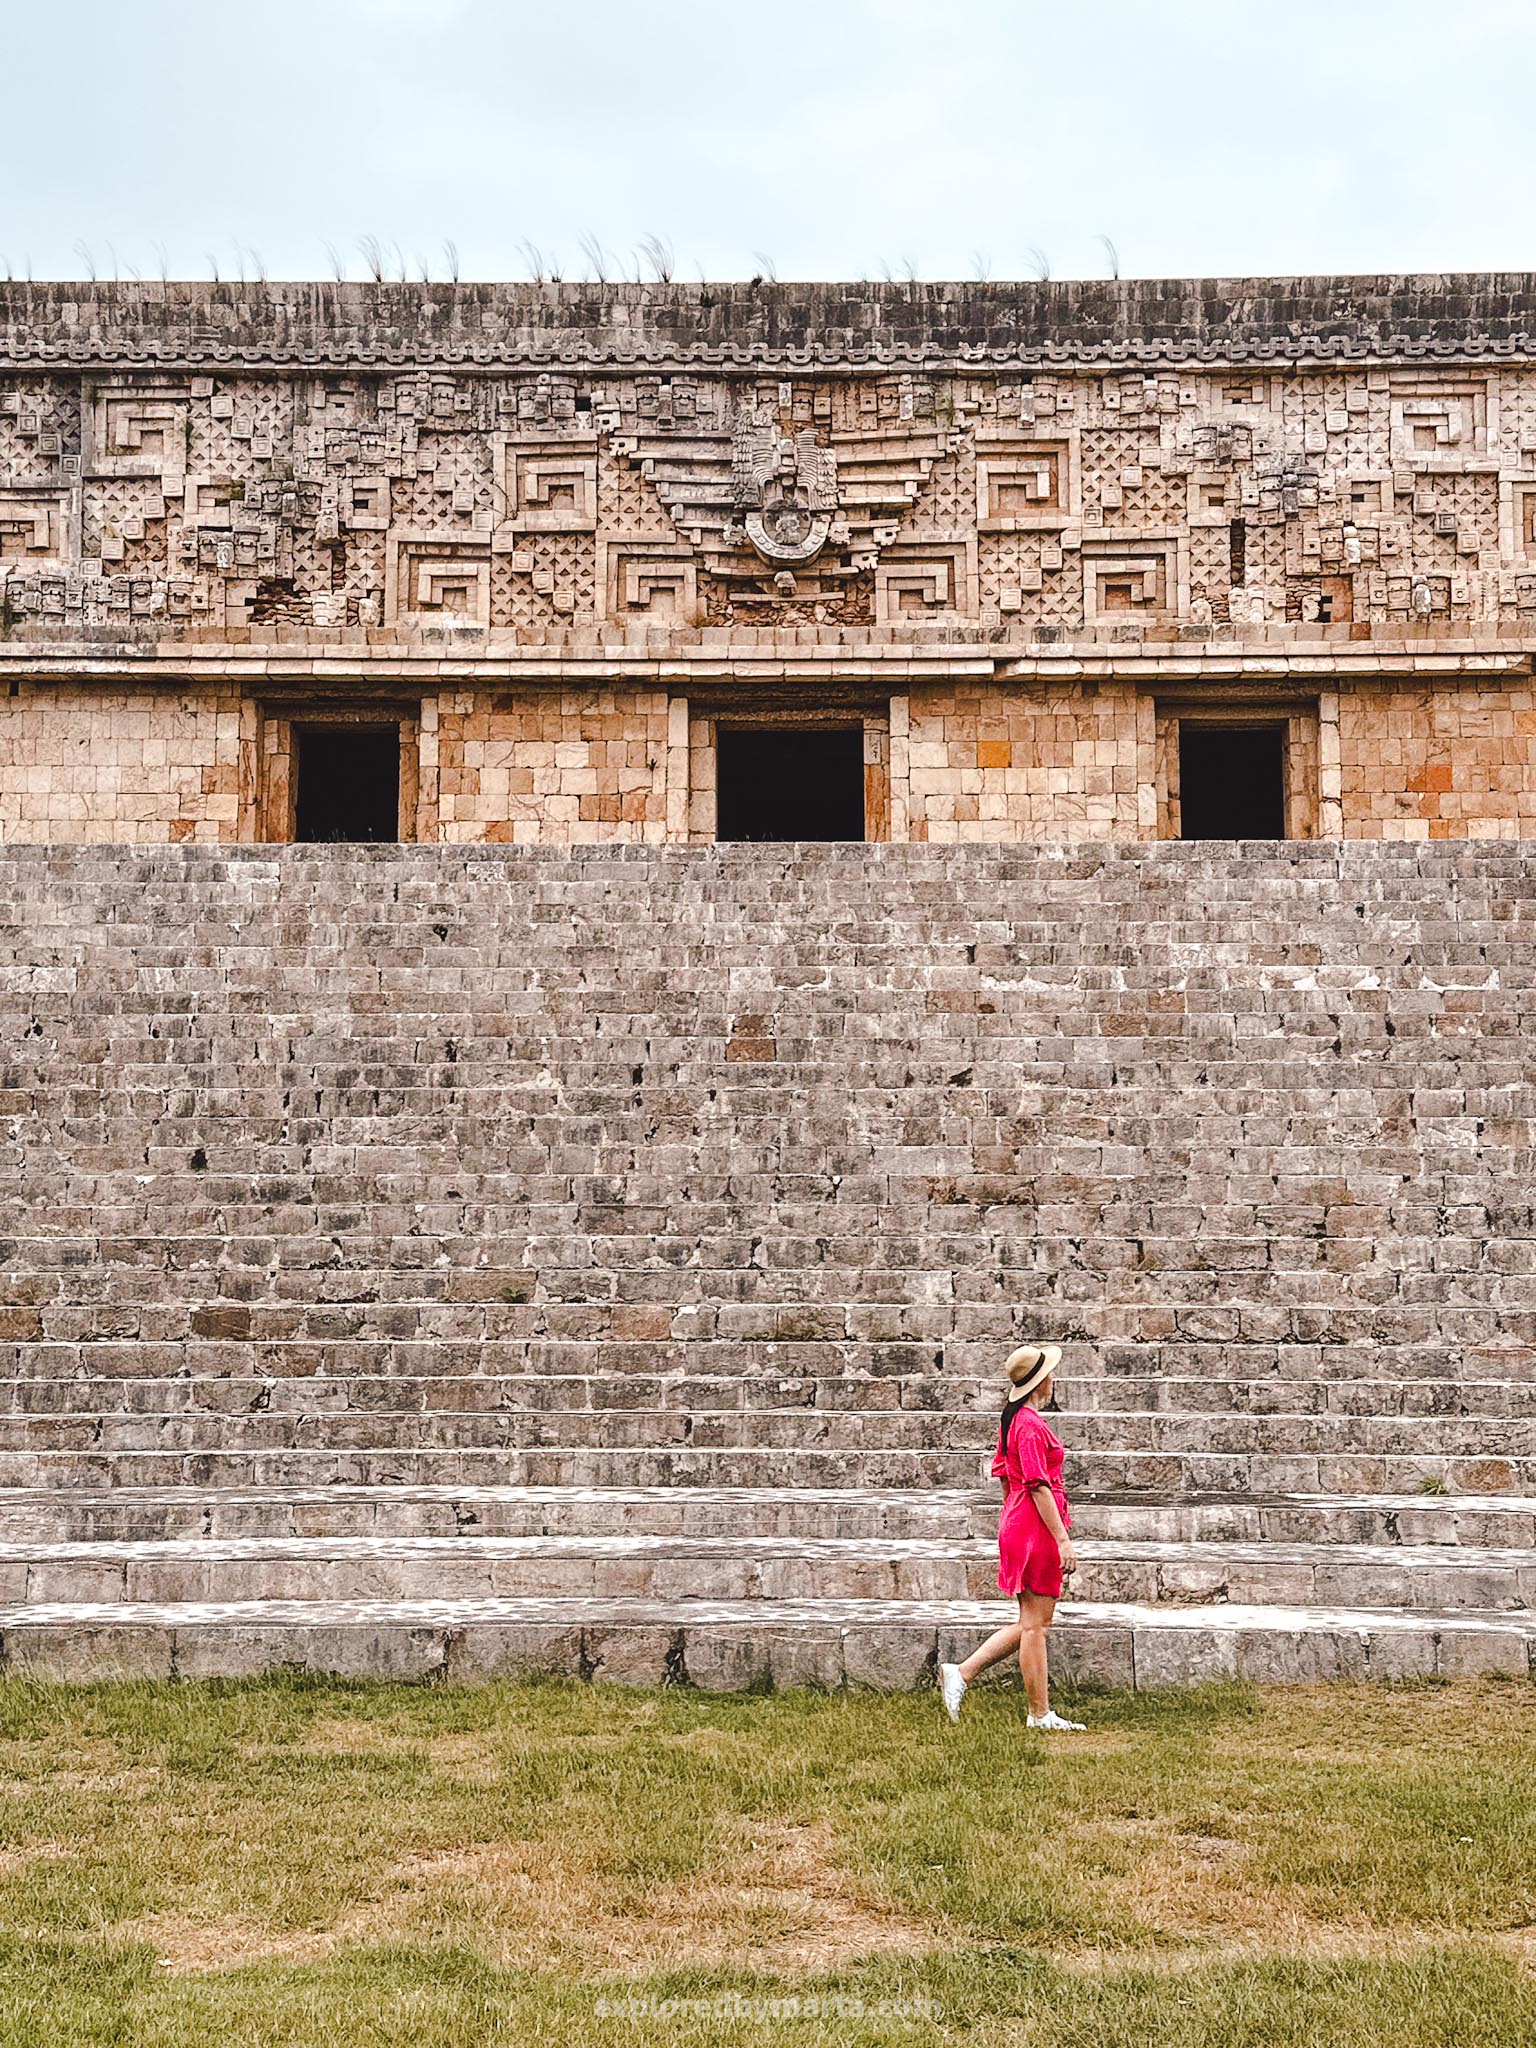 Yucatan peninsula, Mexico - Mayan pyramids and Mayan ruins around Yucatan - Uxmal archaeological zone in Ruta Puuc